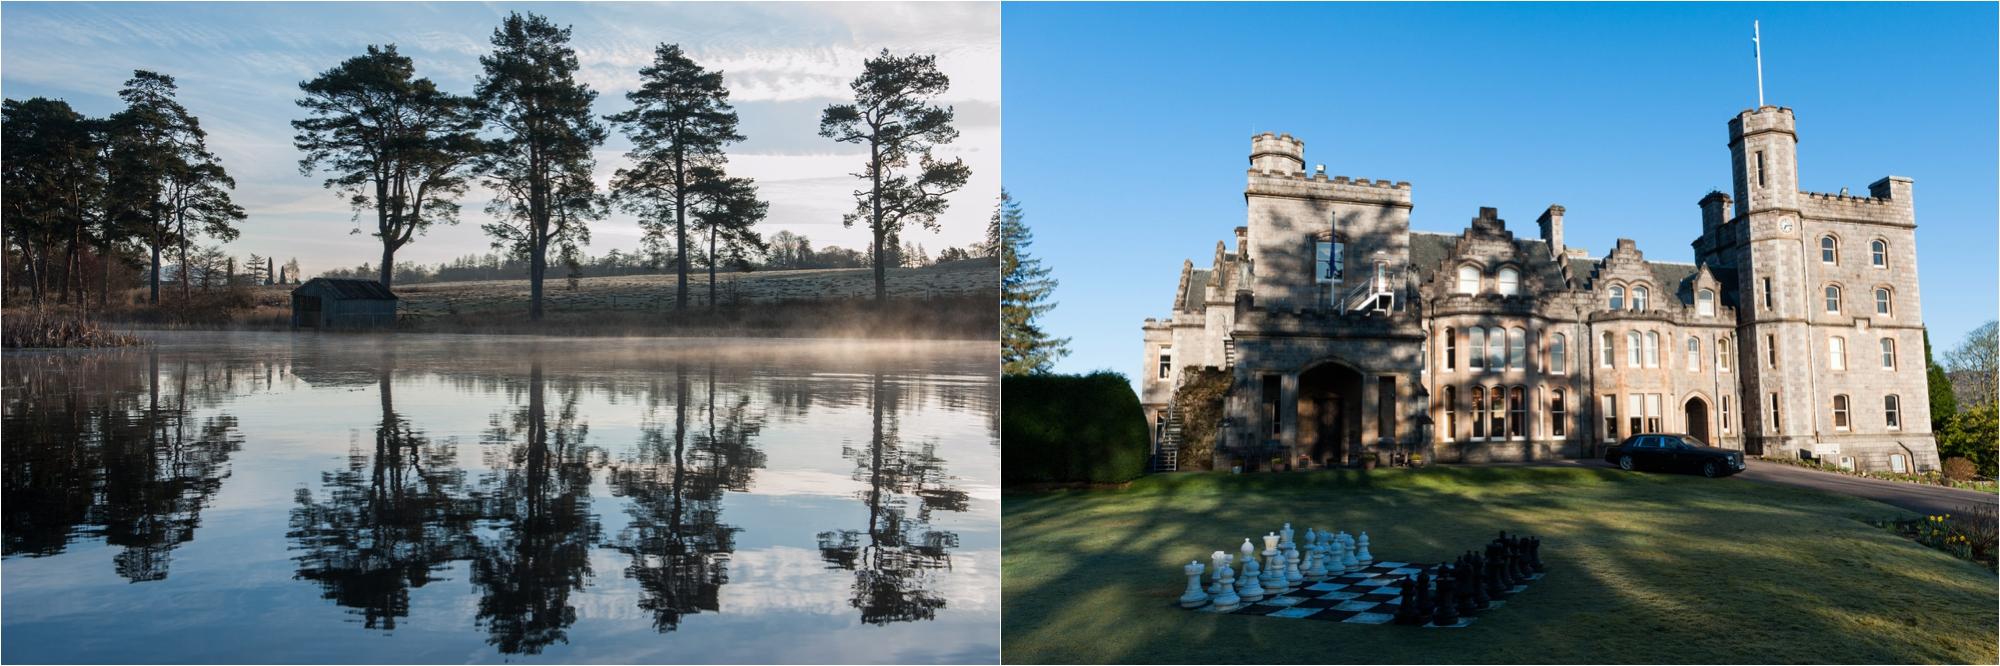 Inverlochy castle, wedding photographer, luxury wedding venue